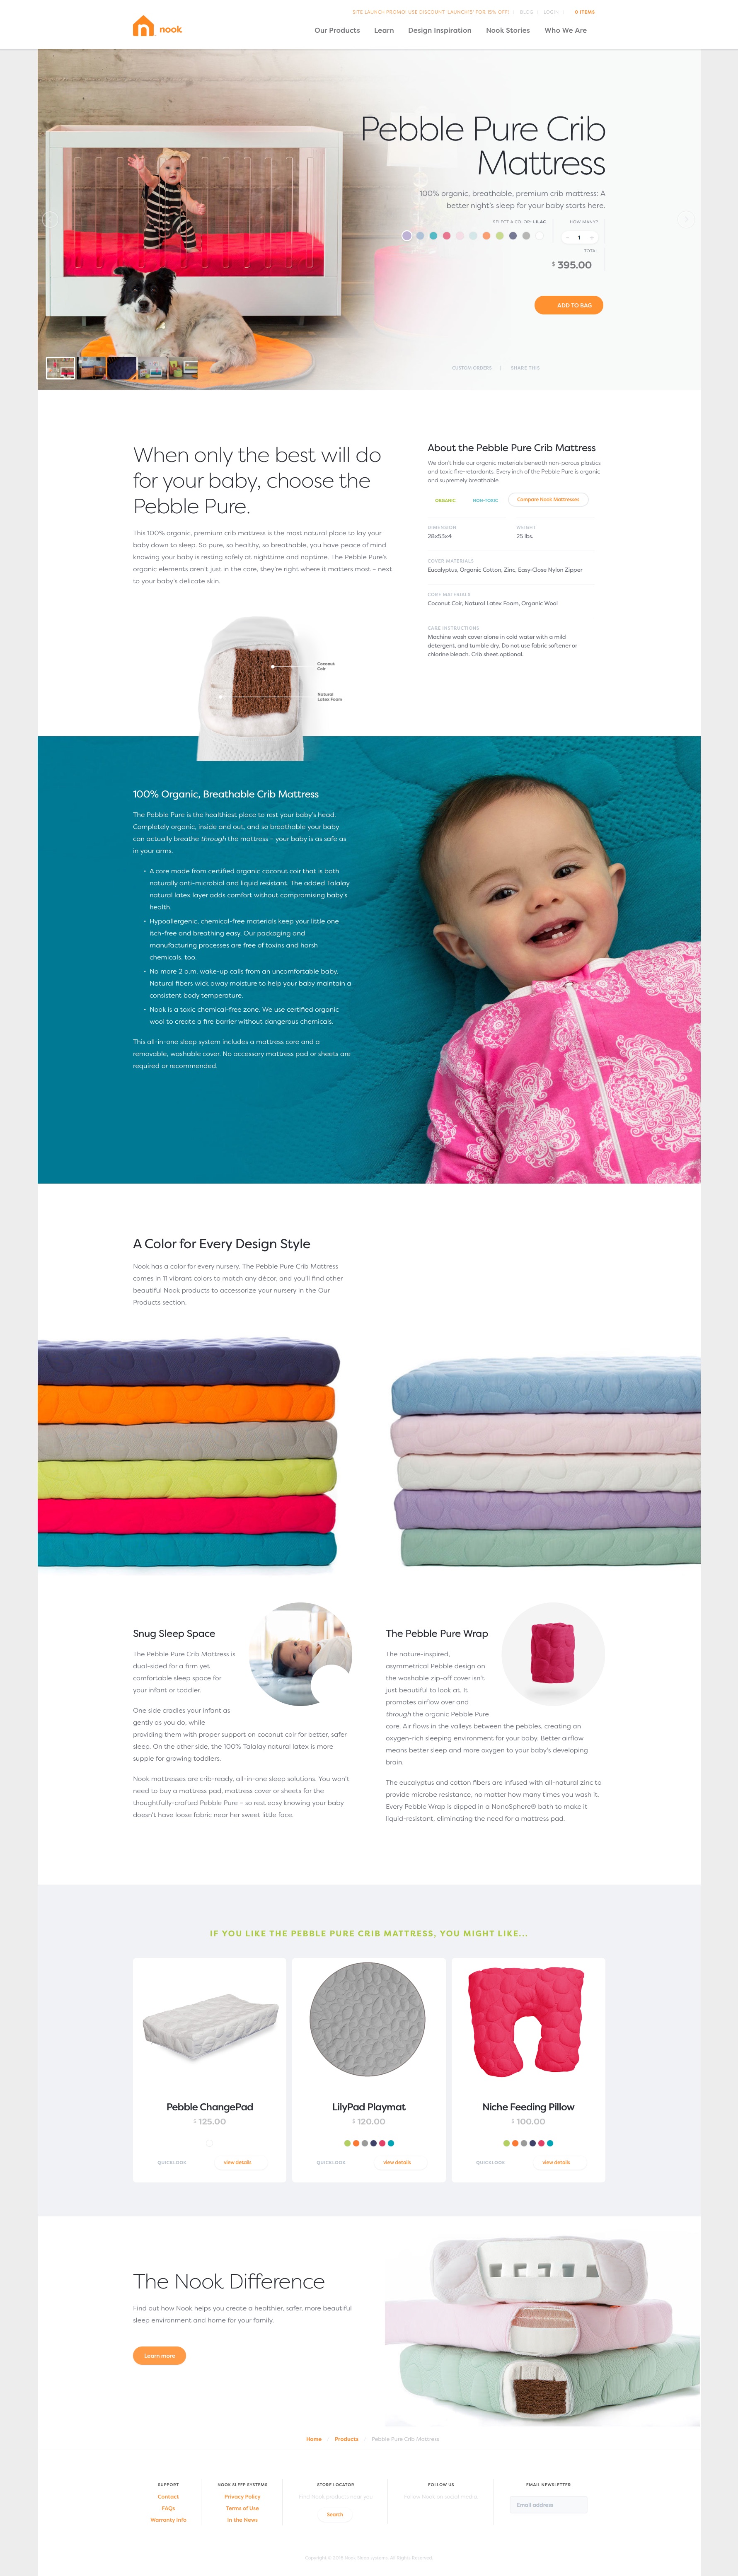 Pebble Pure Crib Mattress | Nook Sleep Systems.jpg